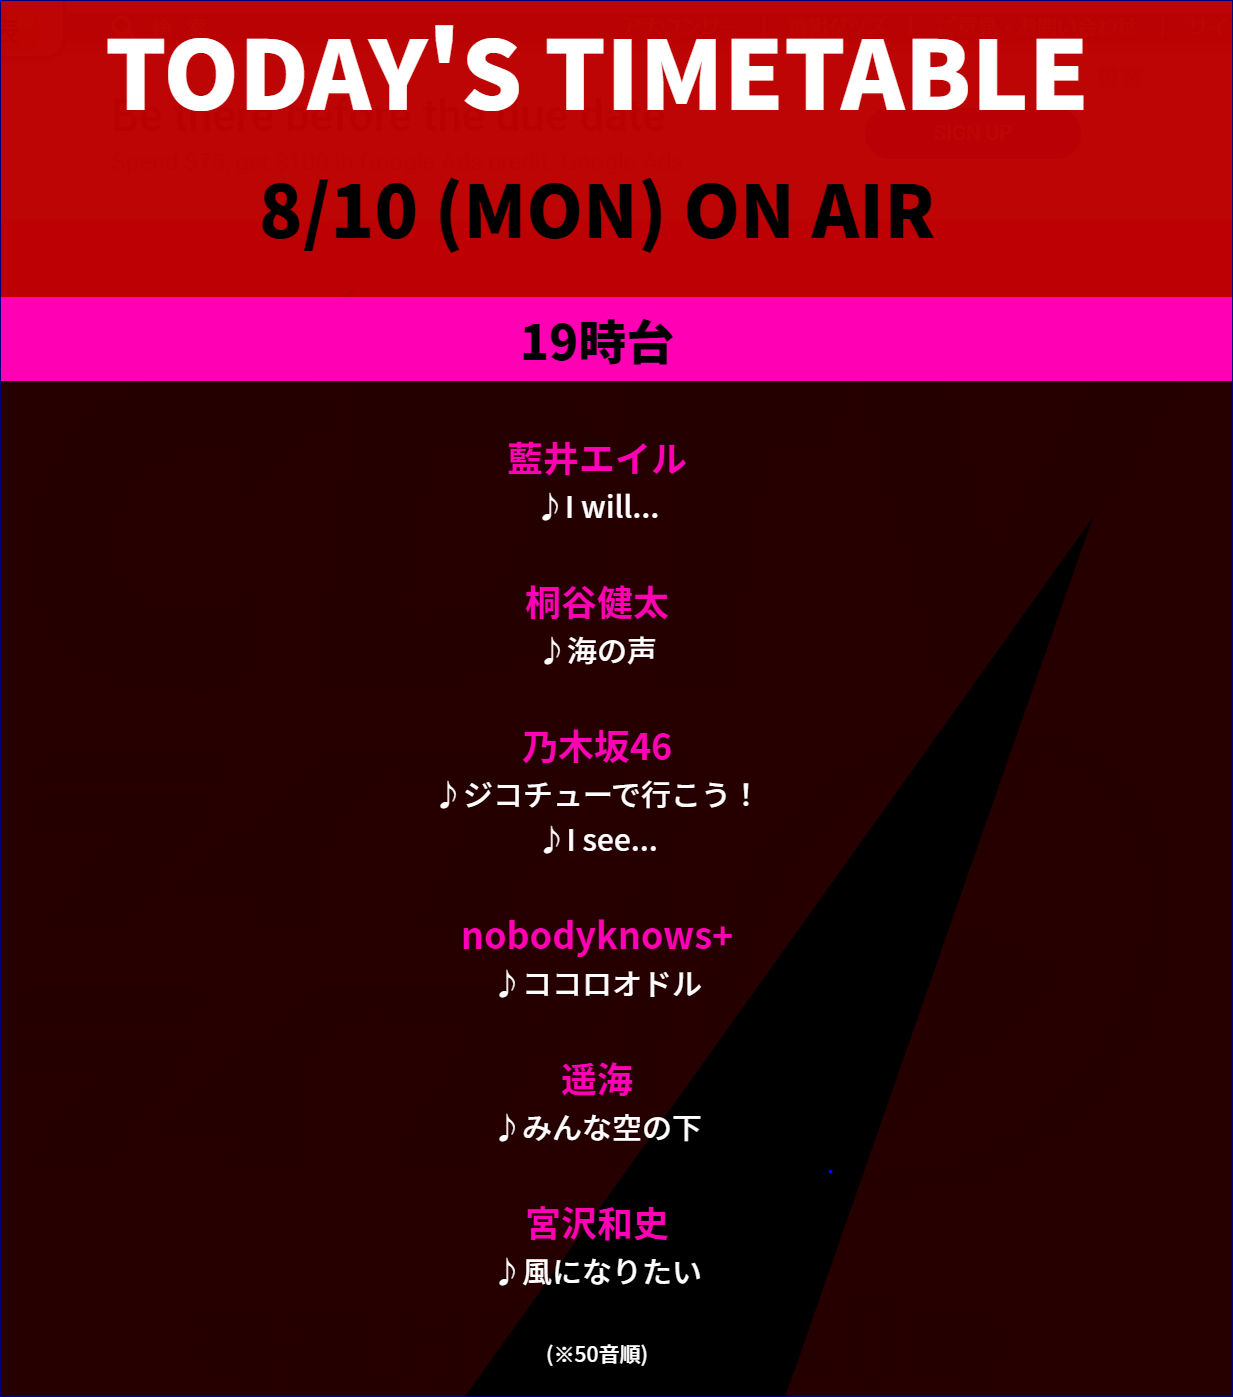 Cdtvライブ ライブ 8月10日キンプリ 乃木坂の出演時間は タイムテーブル情報 しあわせさがし